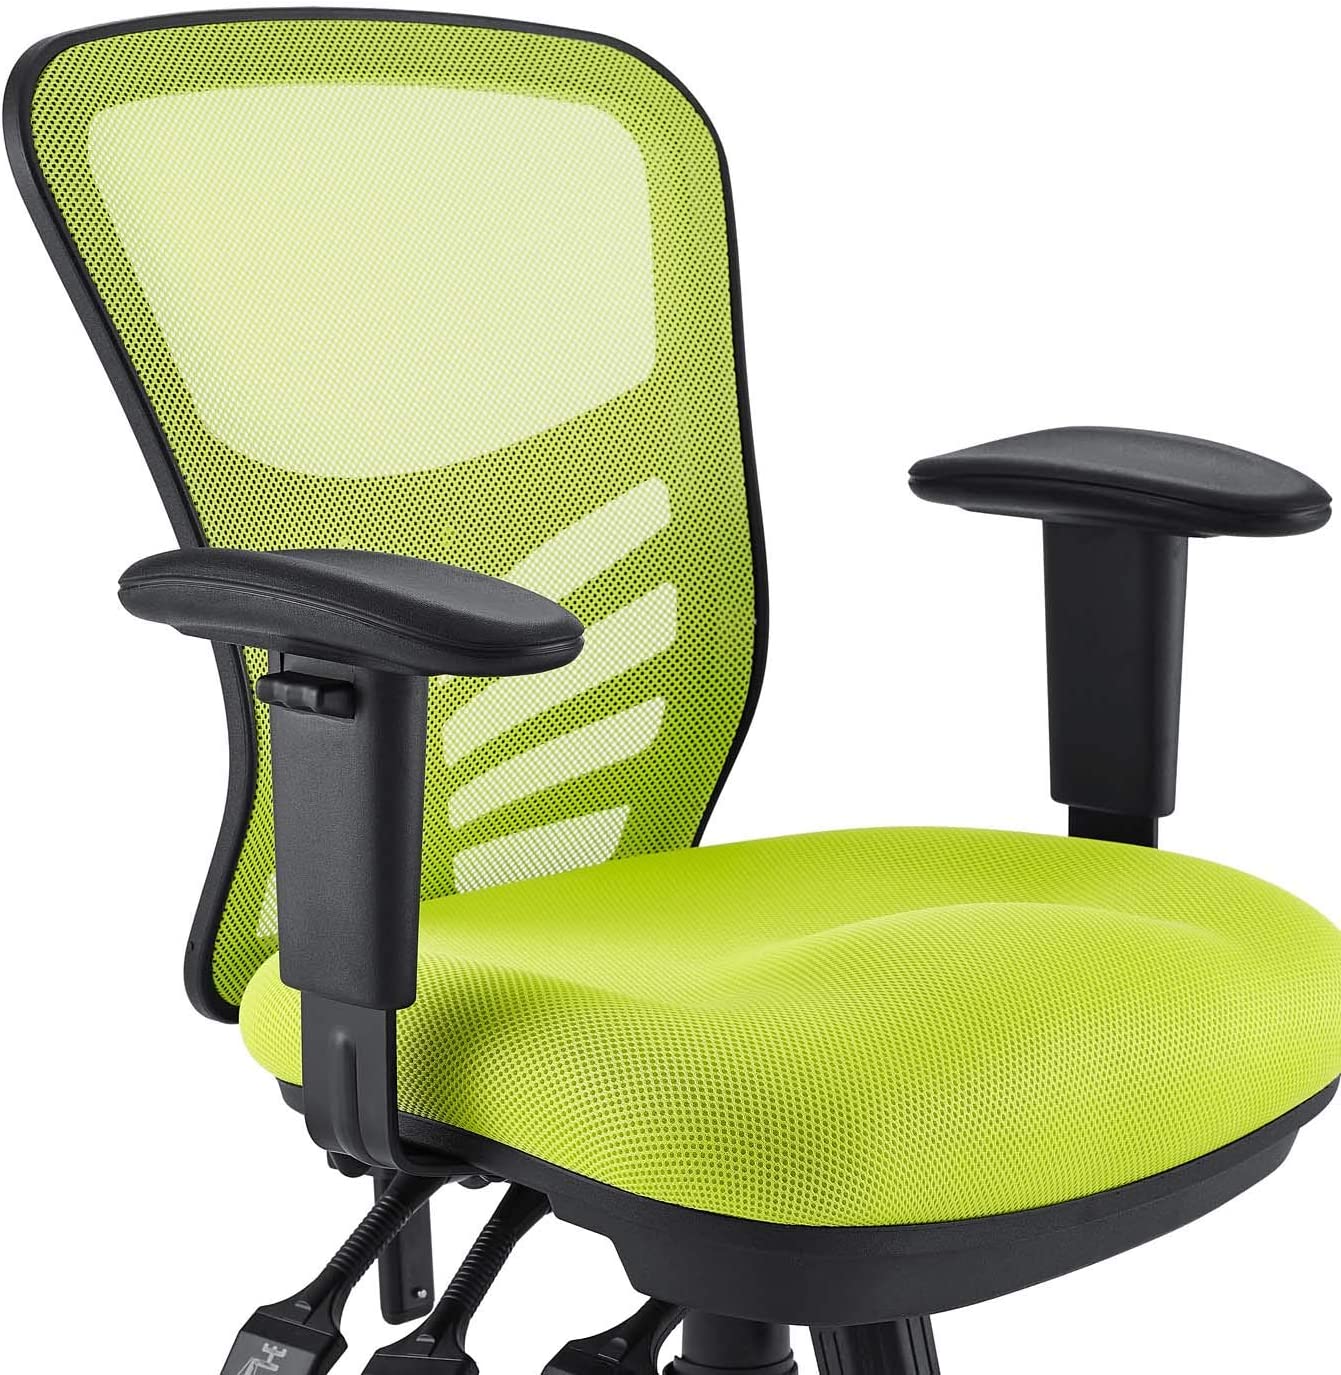 Modway Articulate Ergonomic Mesh Office Chair in Green